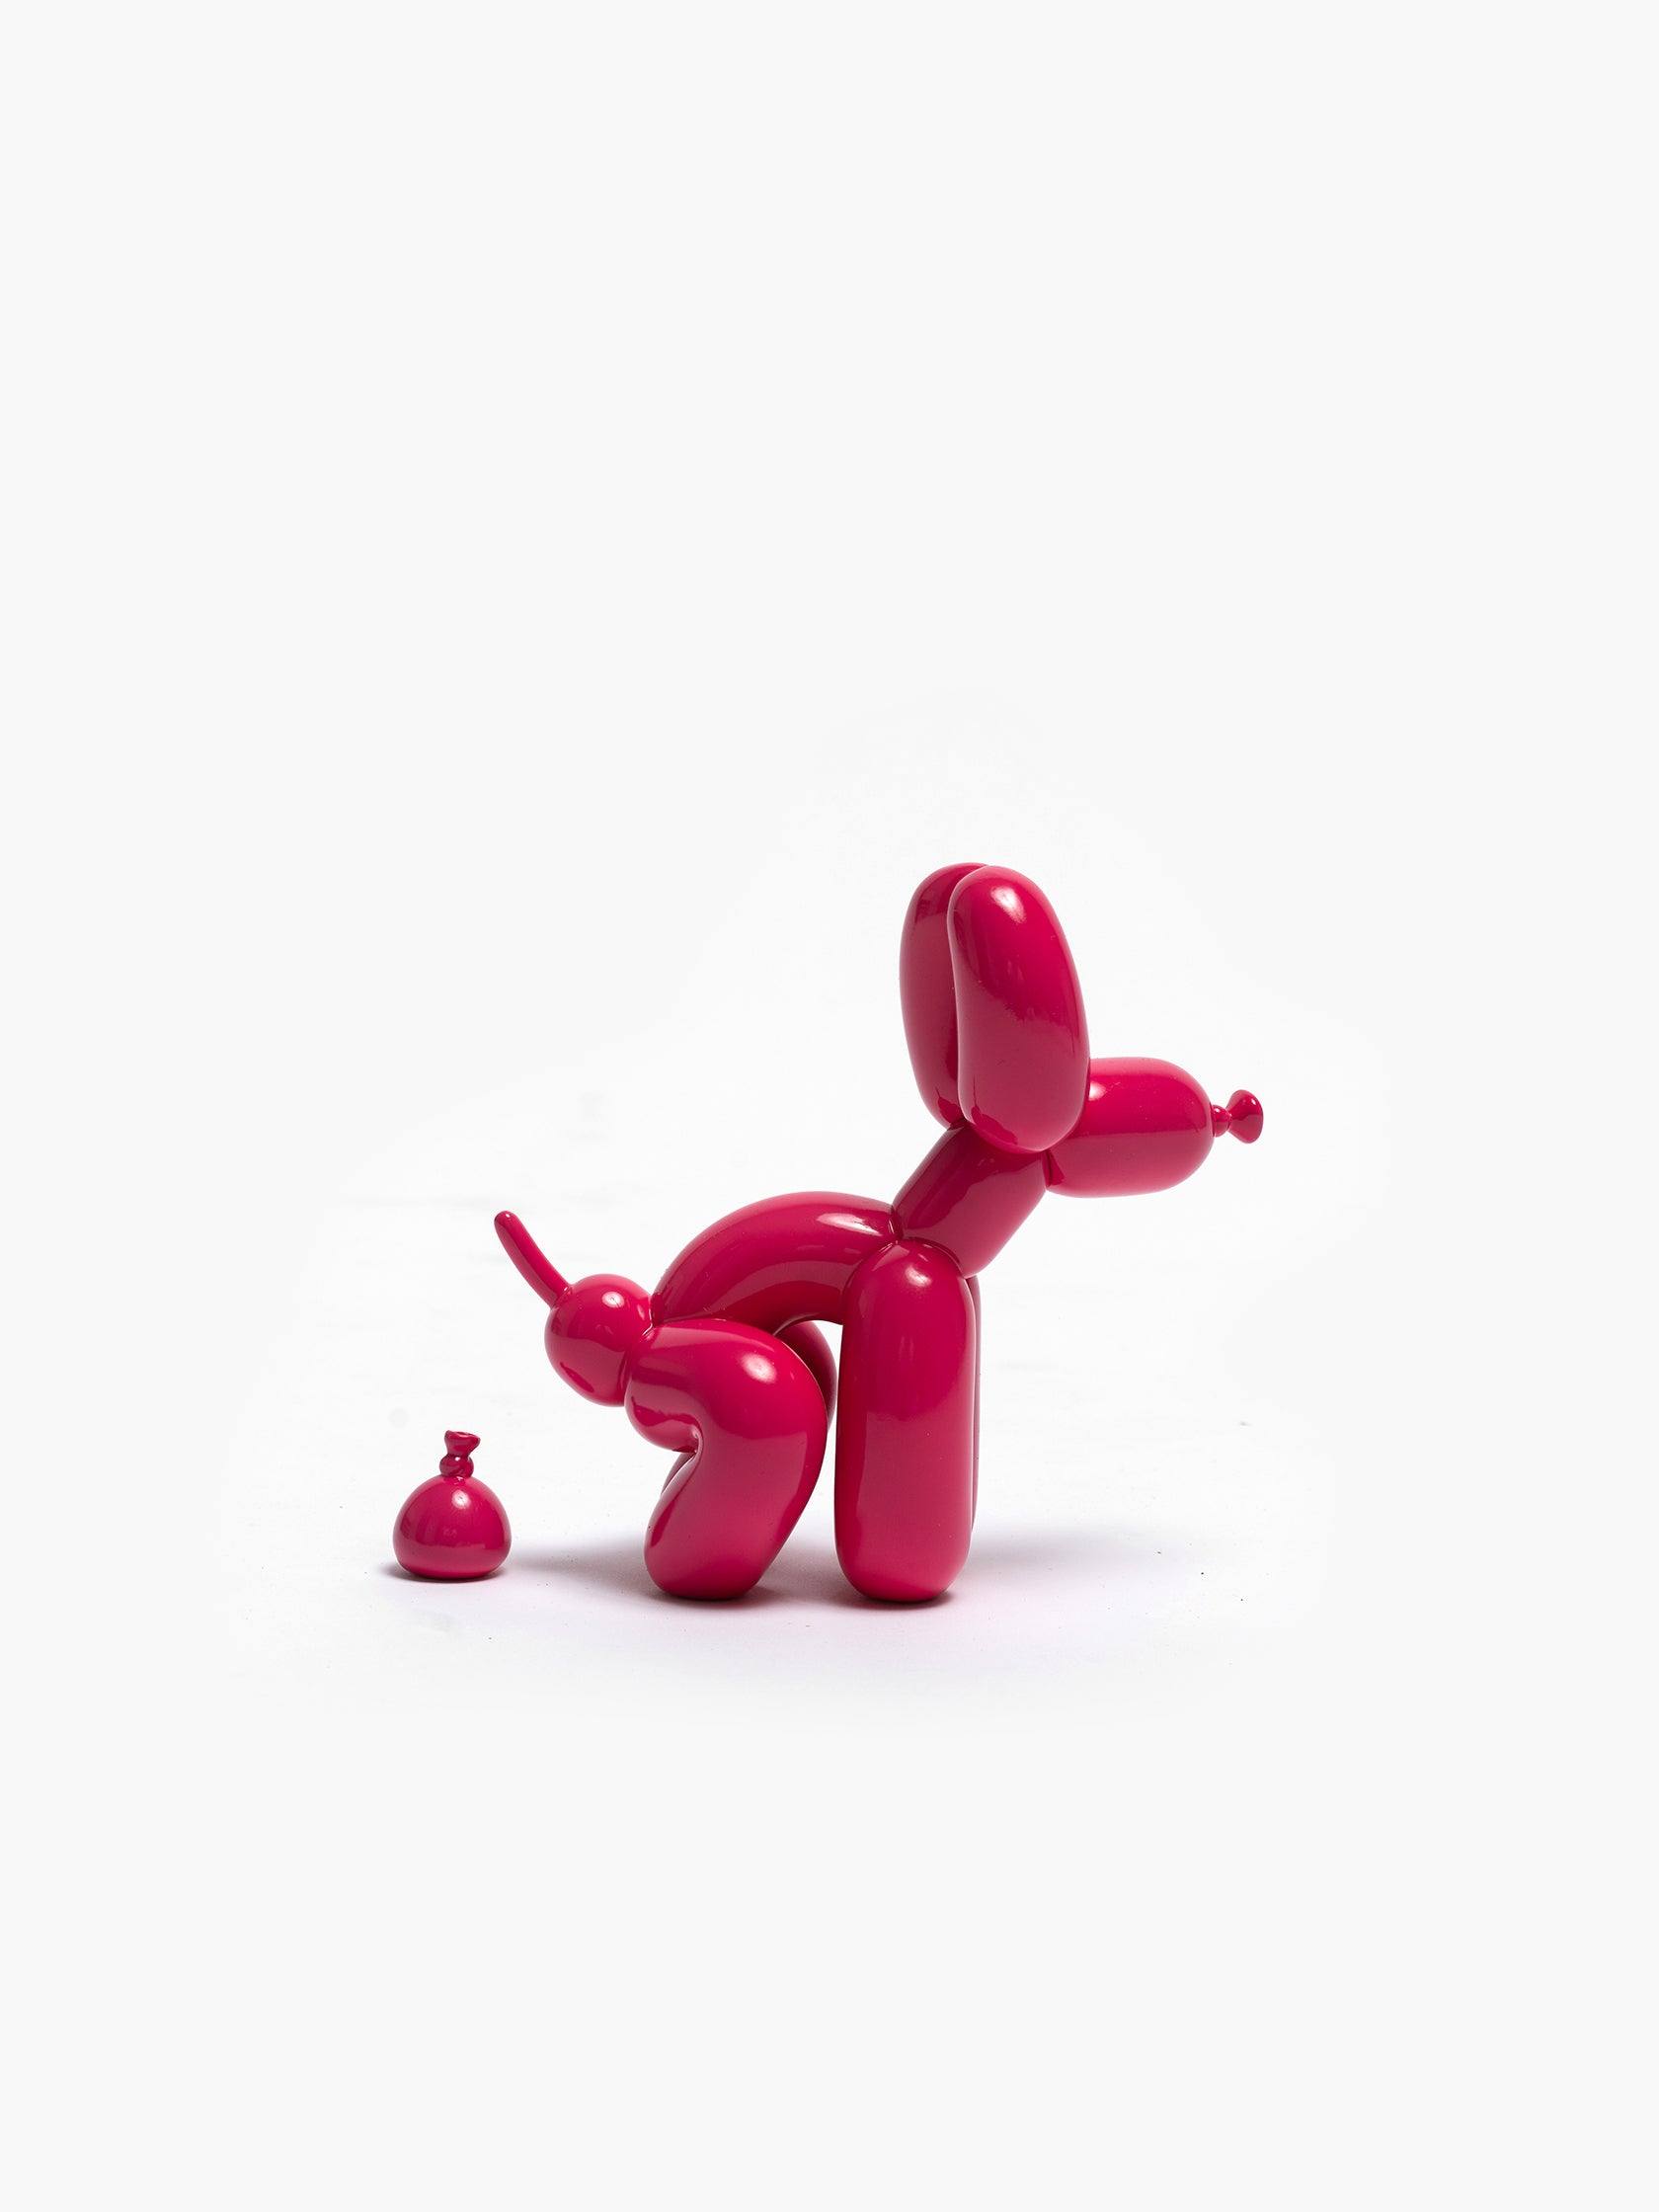 POPek Balloon Dog Mini by Whatshisname - Mankovsky Gallery